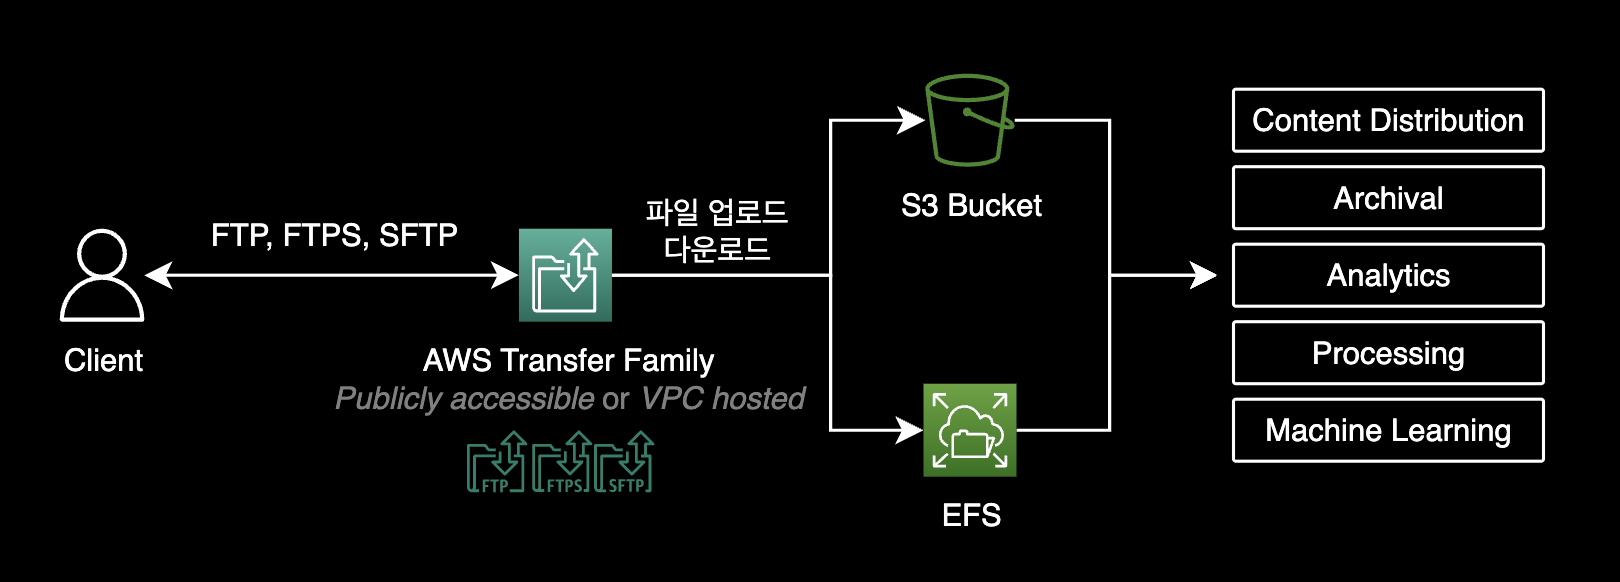 AWS Transfer Family 작동방식